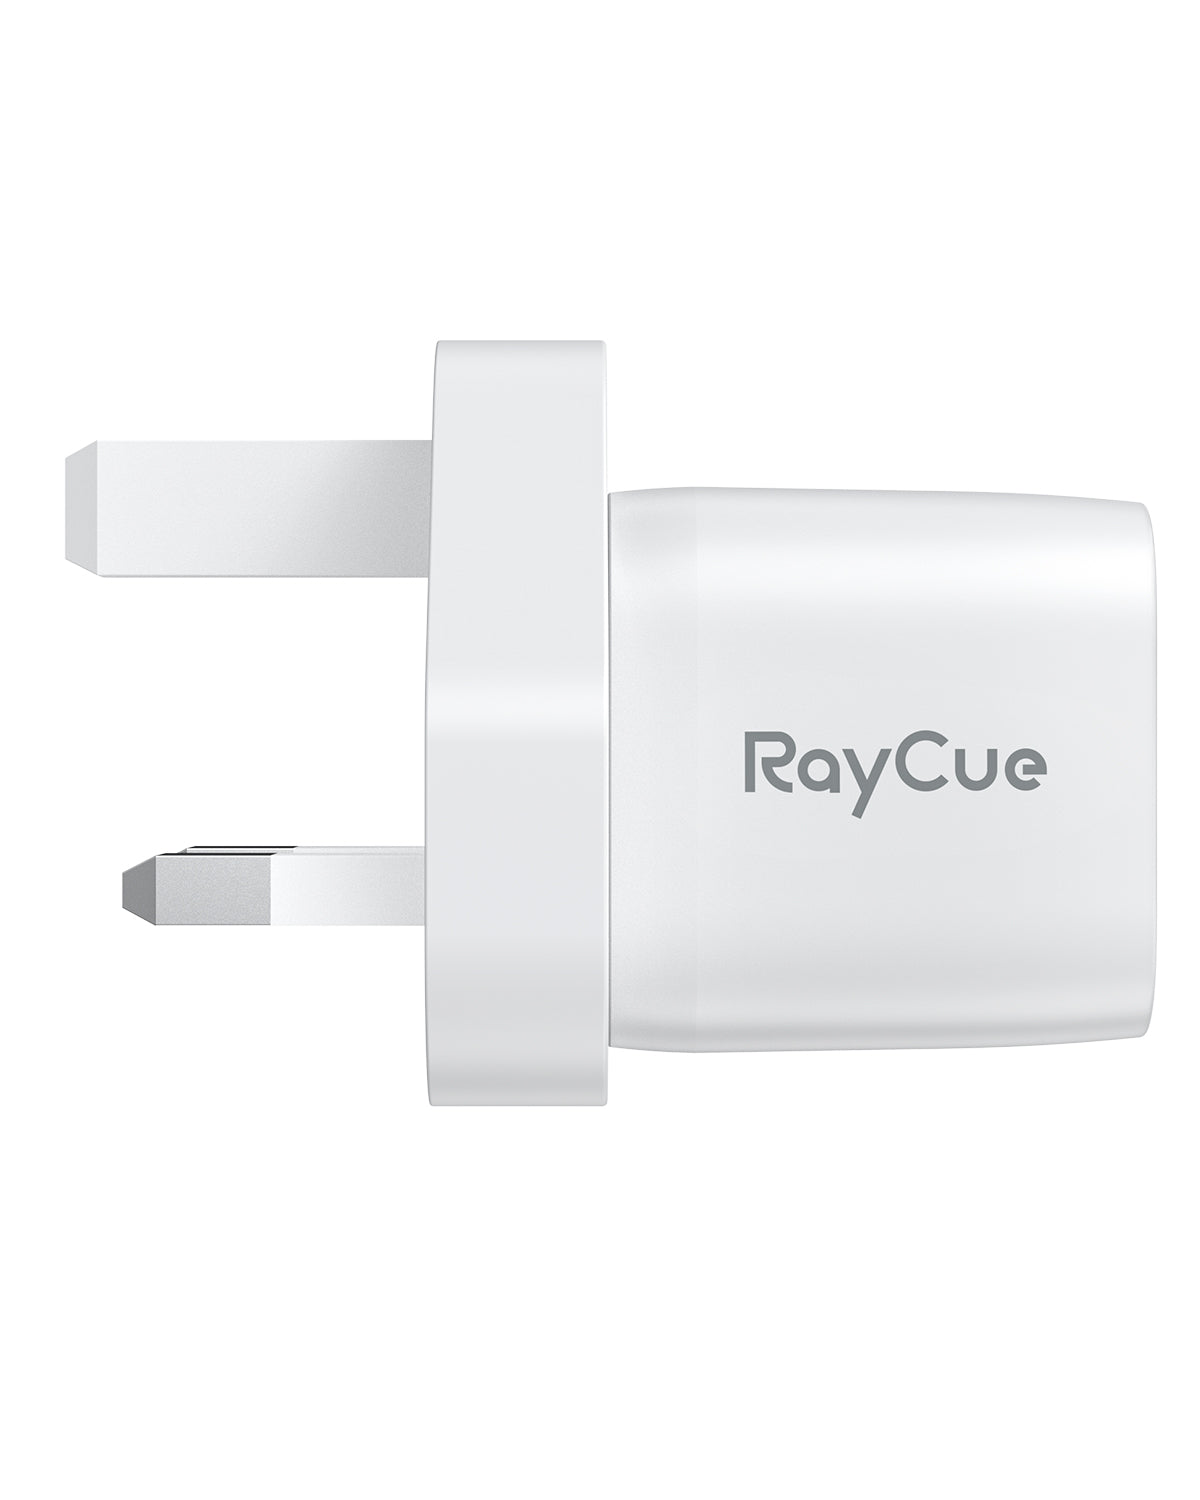 RayCue BlitzCharge MiniQ 20W USB-C PD Fast Charger-UK Plug